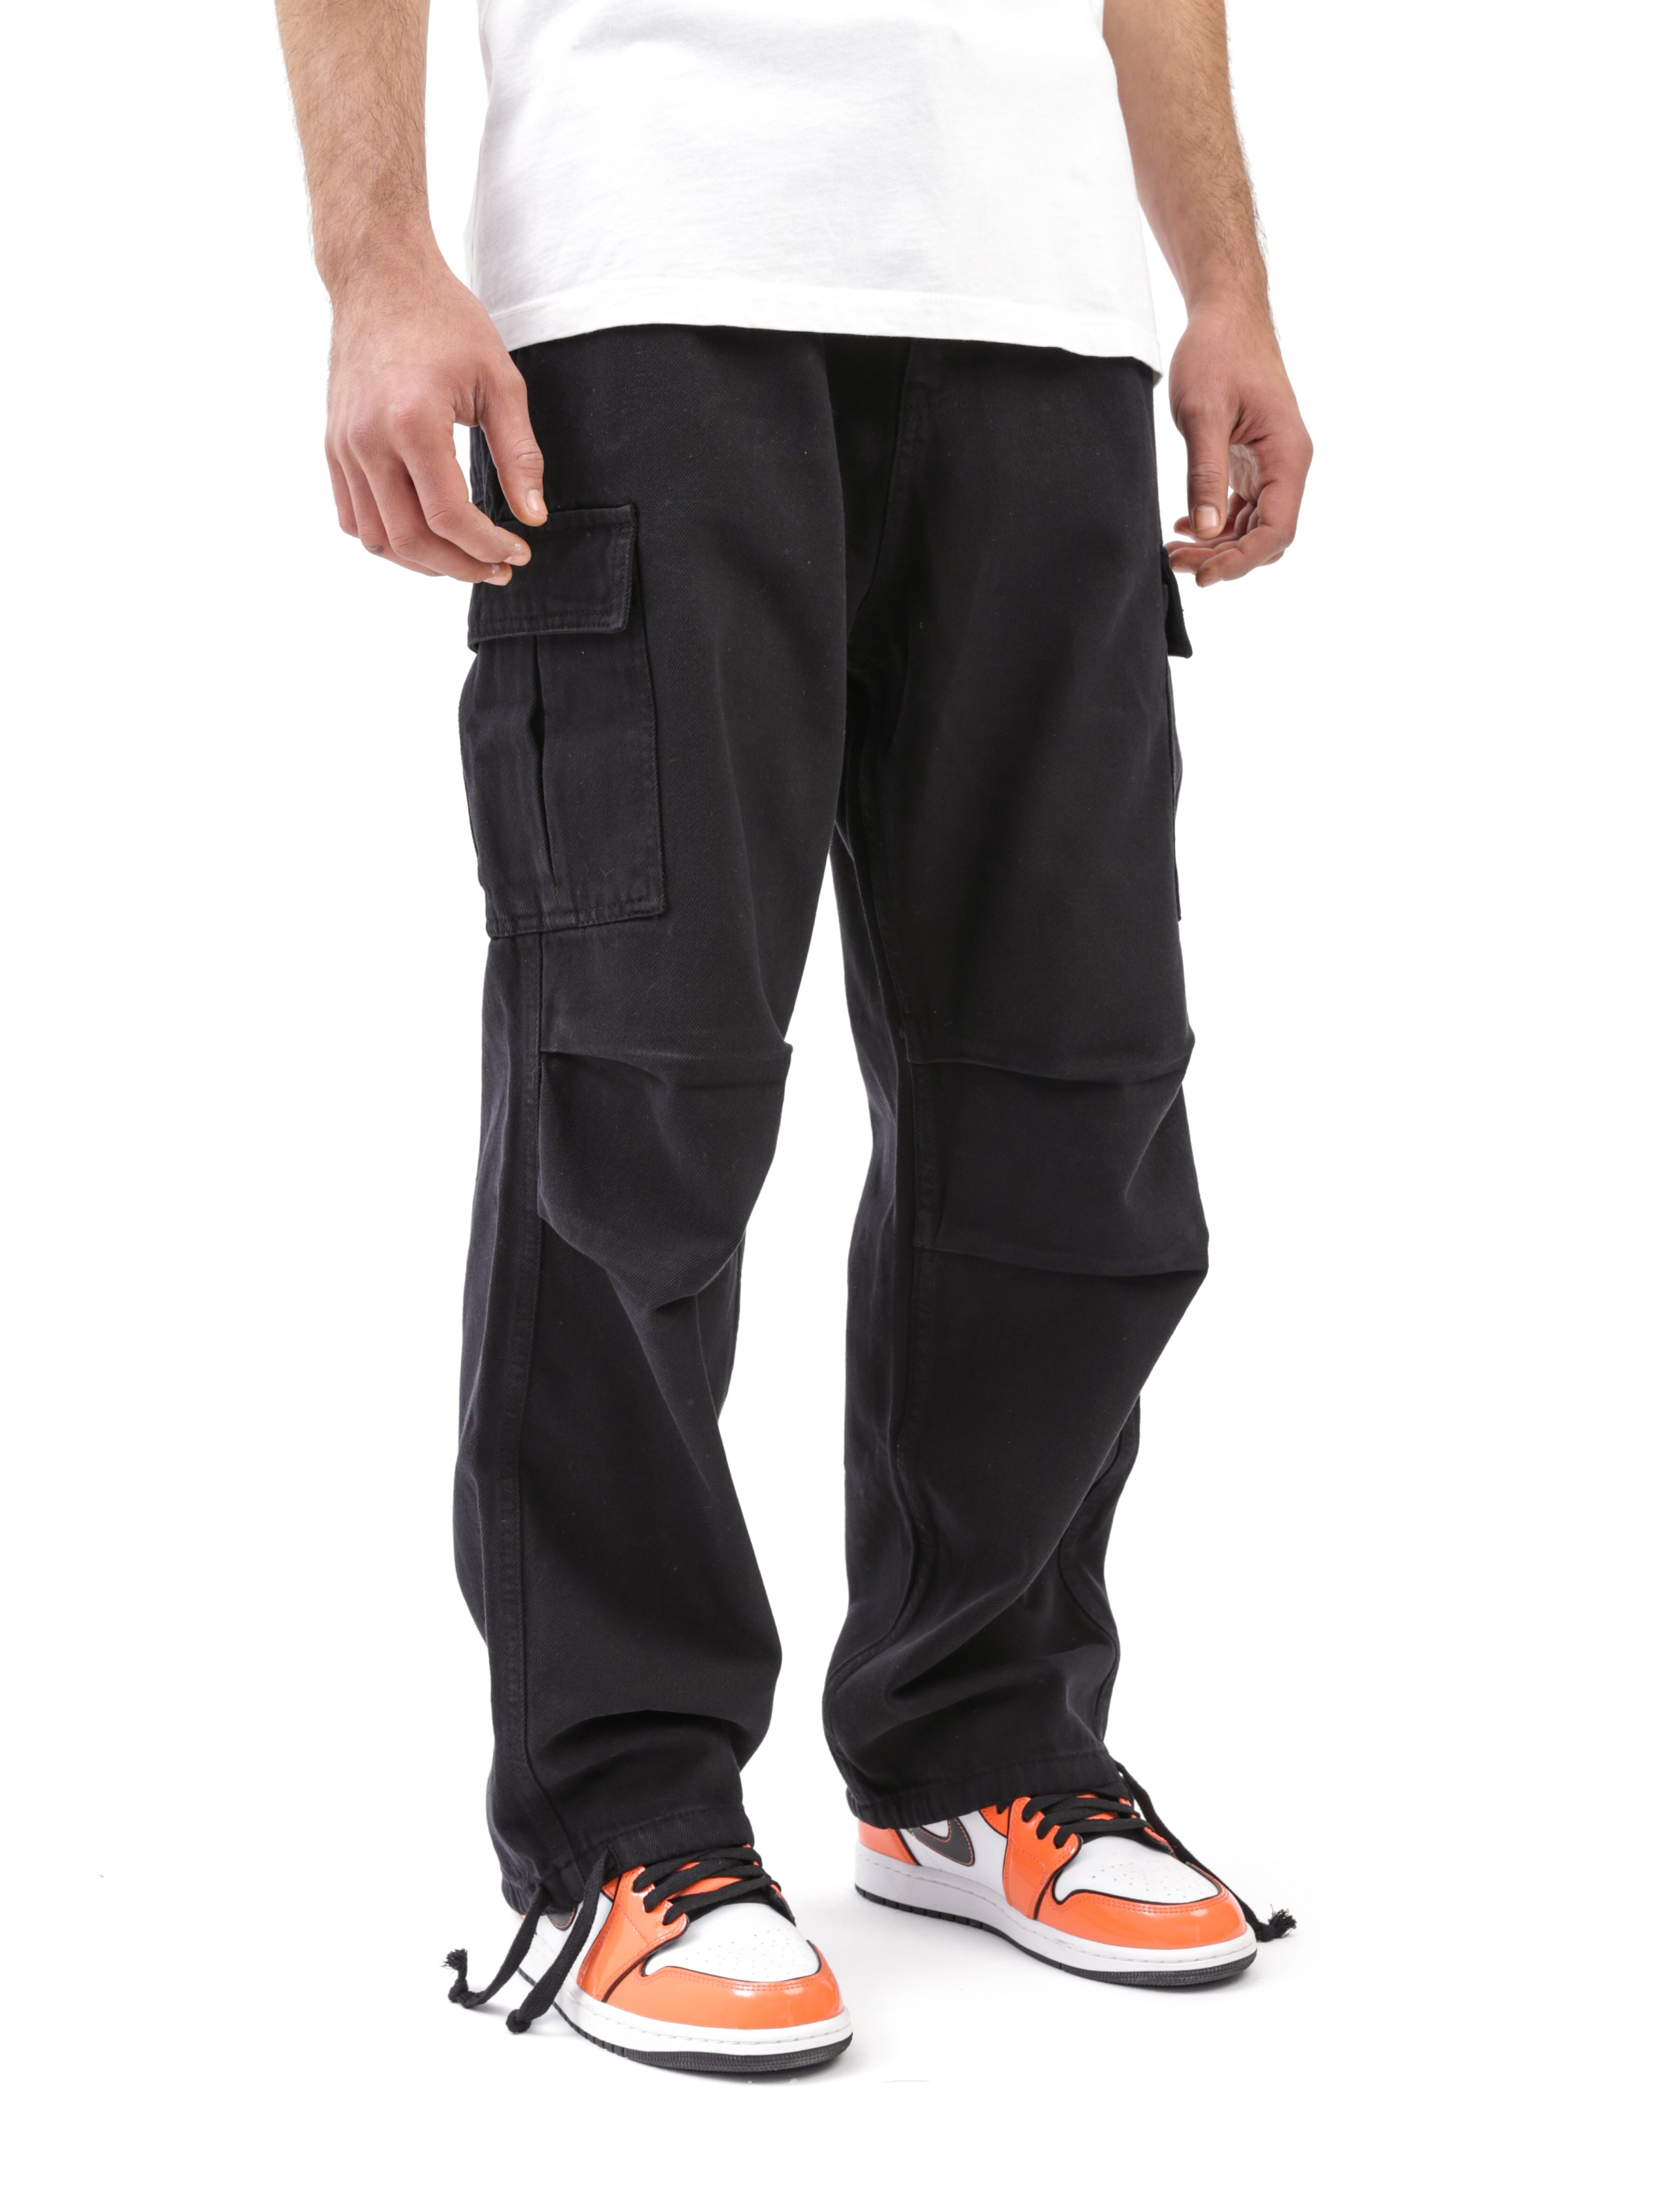 Mono b Solid Black Cargo Pants Size M - 40% off